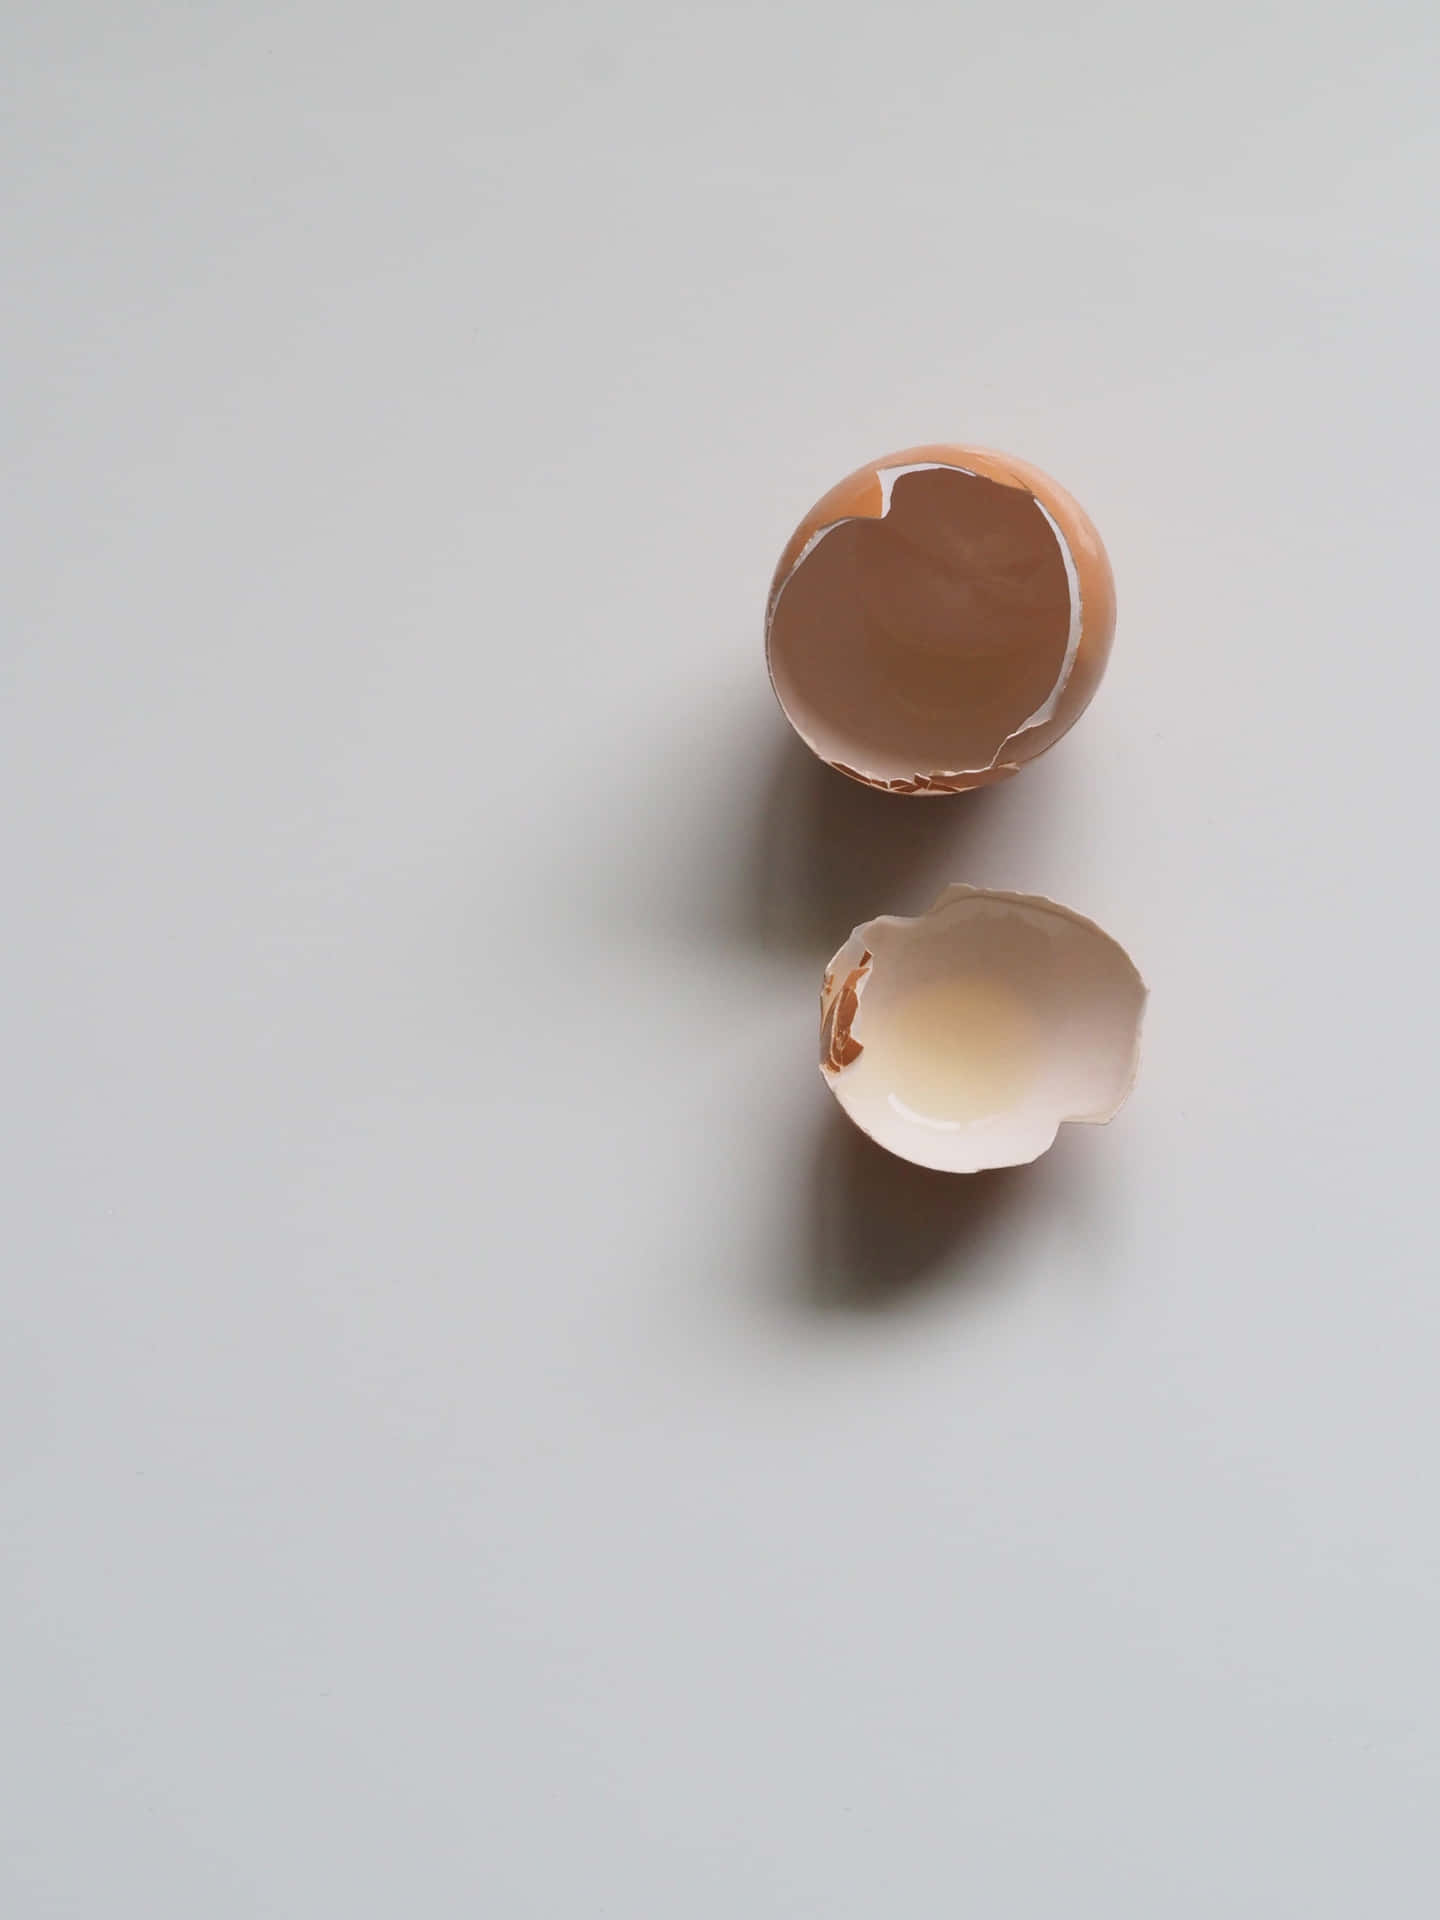 Empty Egg Shell Wallpaper